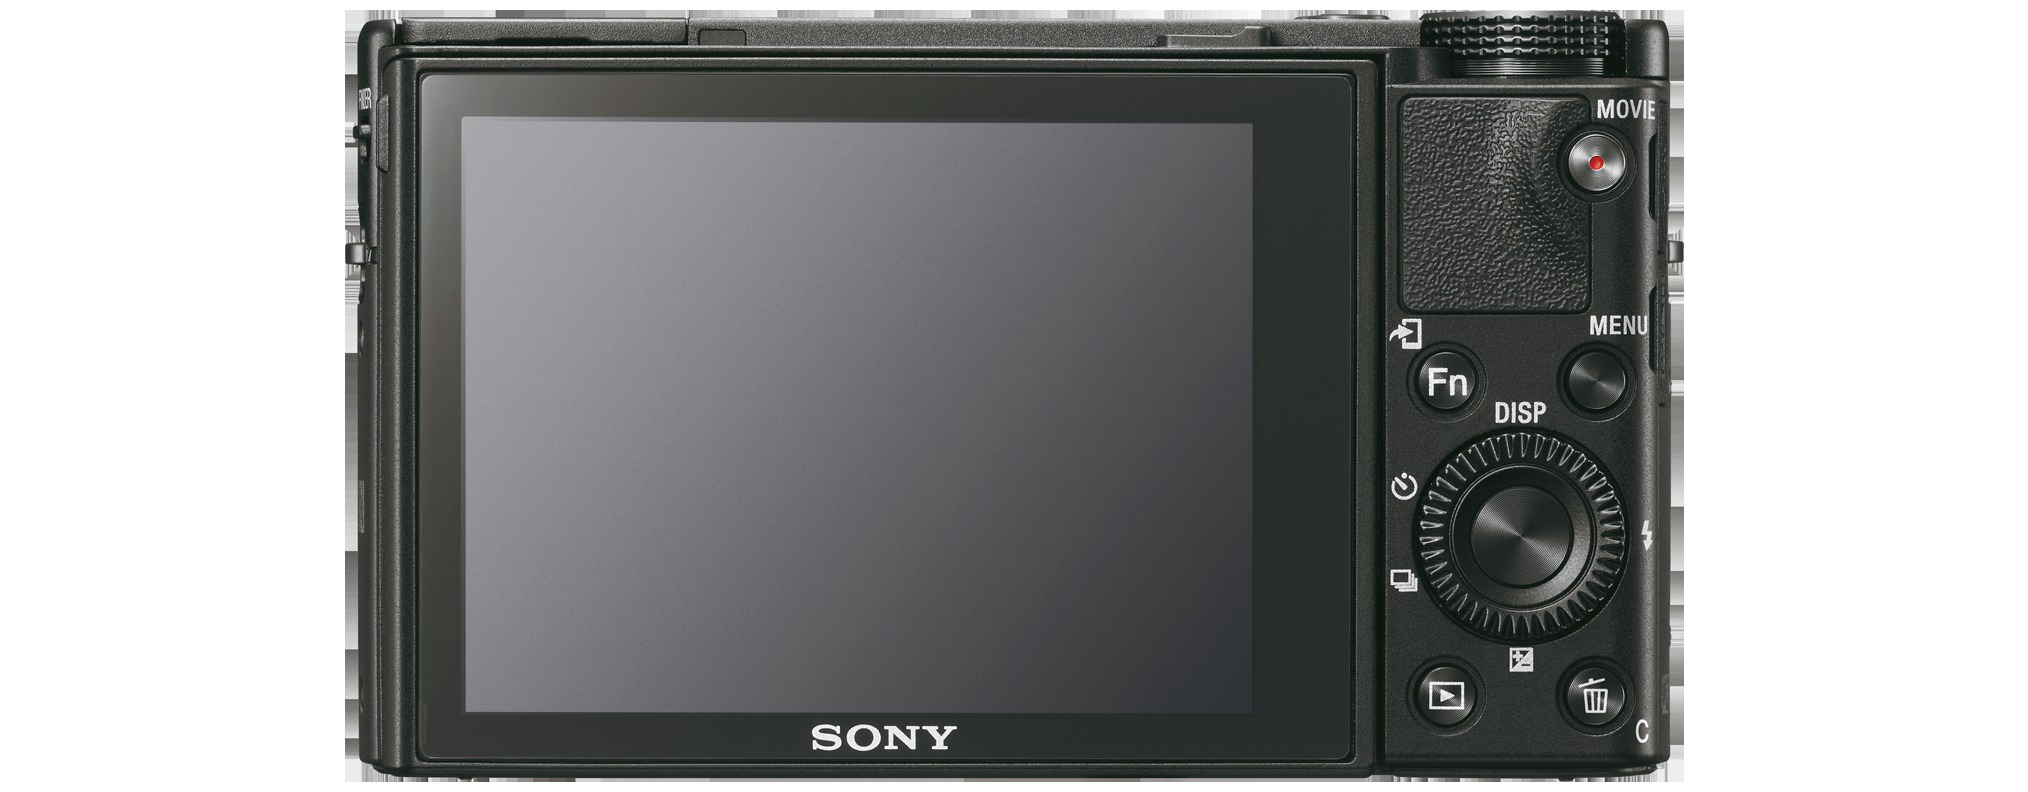 SONY Cyber-shot DSC-RX100 VA , opt. Zeiss Xtra Zoom, Schwarz, KIT Fine/TFT-LCD, 2.9x NFC WLAN Digitalkamera